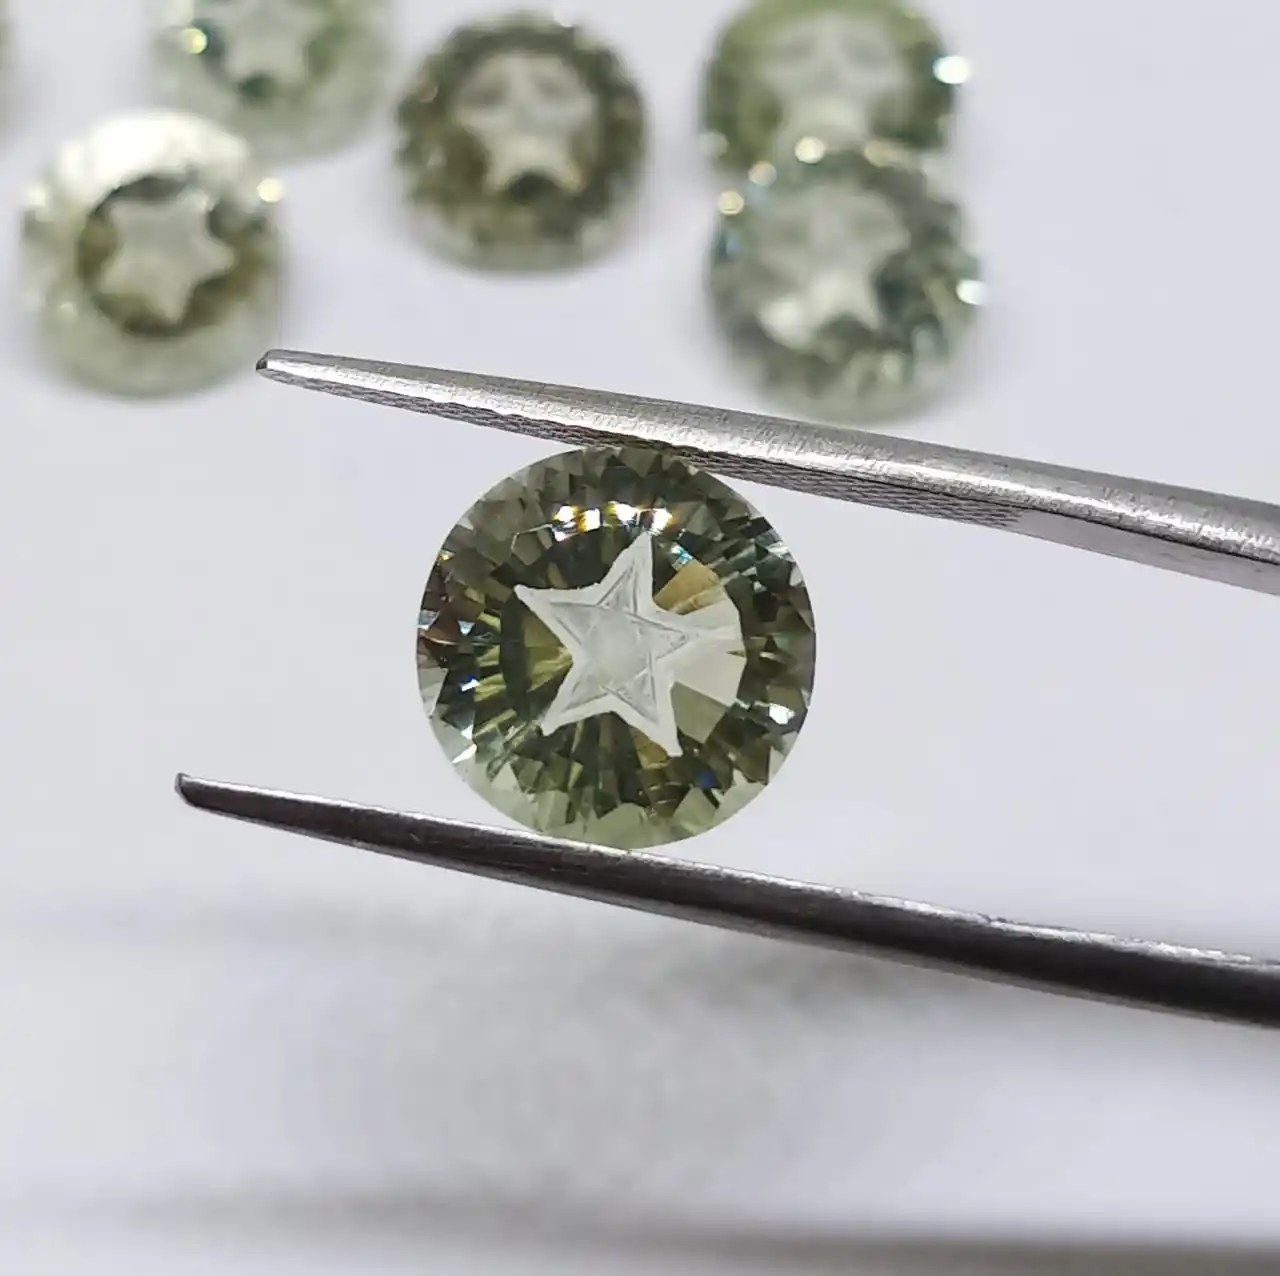 100% Natural Green Amethyst Star Radiant Cut Beautiful und Rare Cut Stone Size 10x10 MM Green Amethyst Loose Gemstone